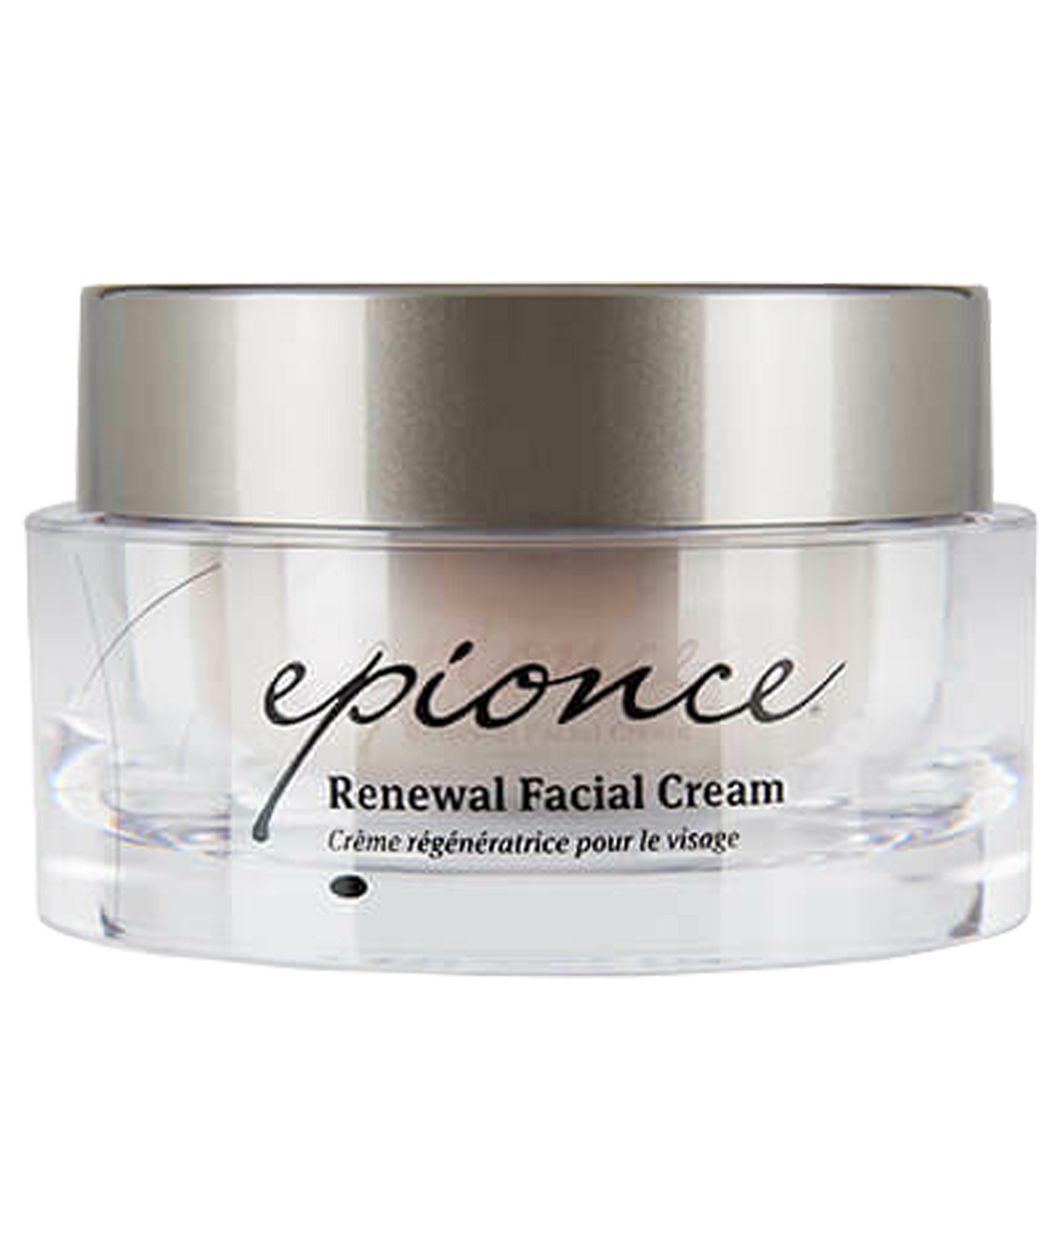 Renewal Facial Cream